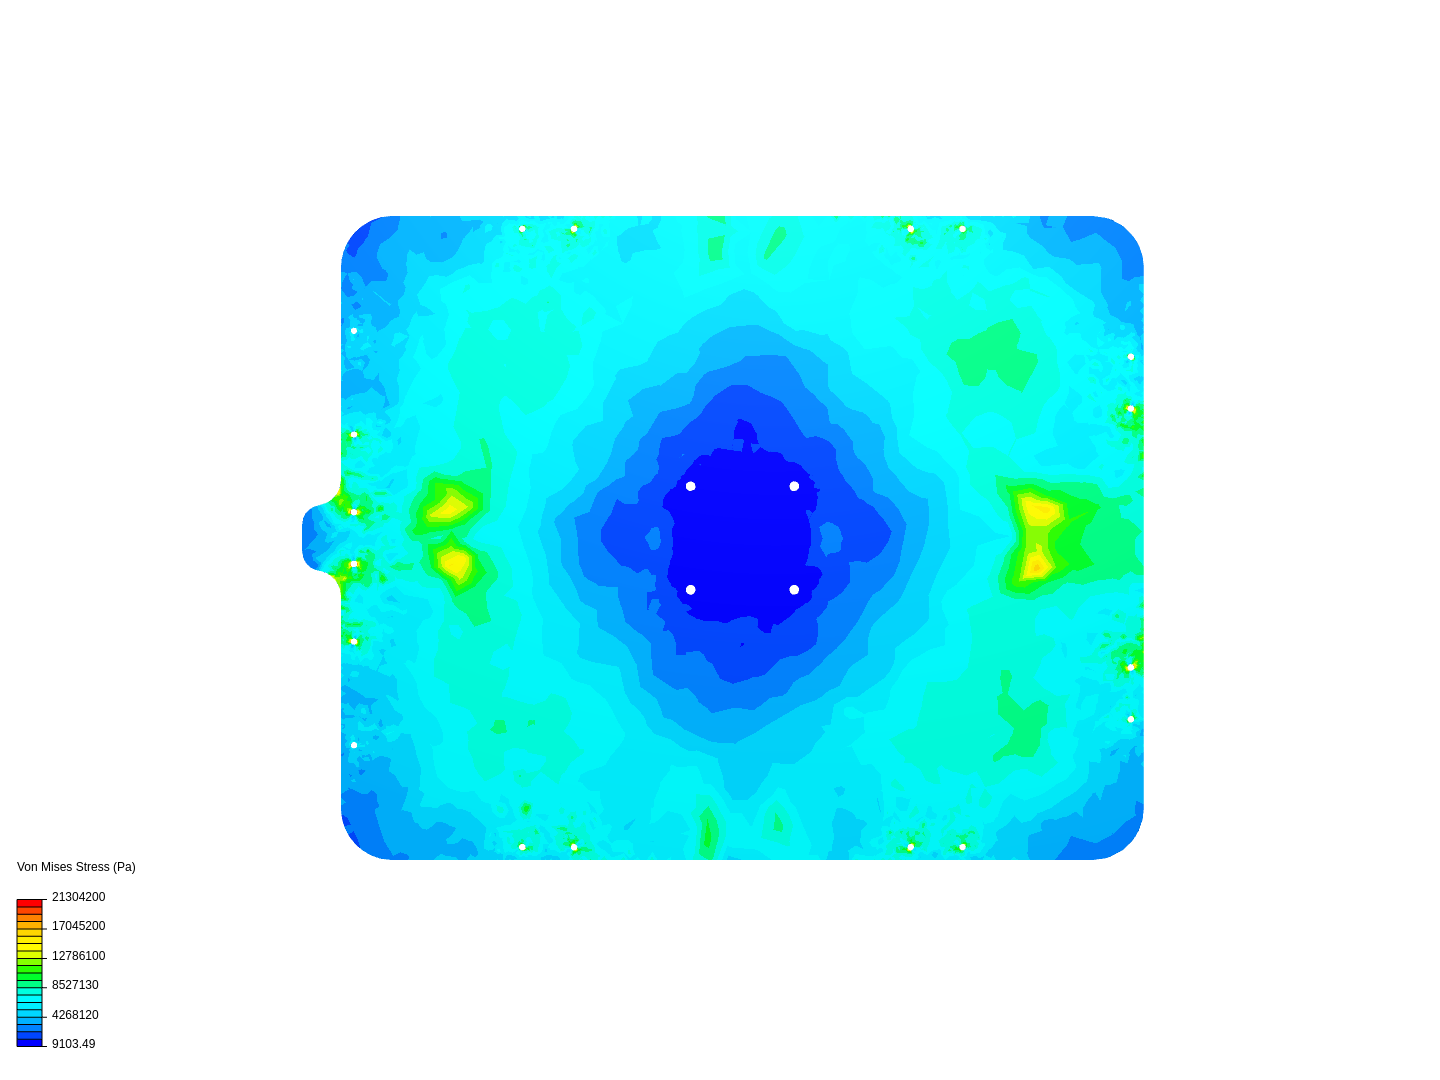 Base Plate Analysis 2 image